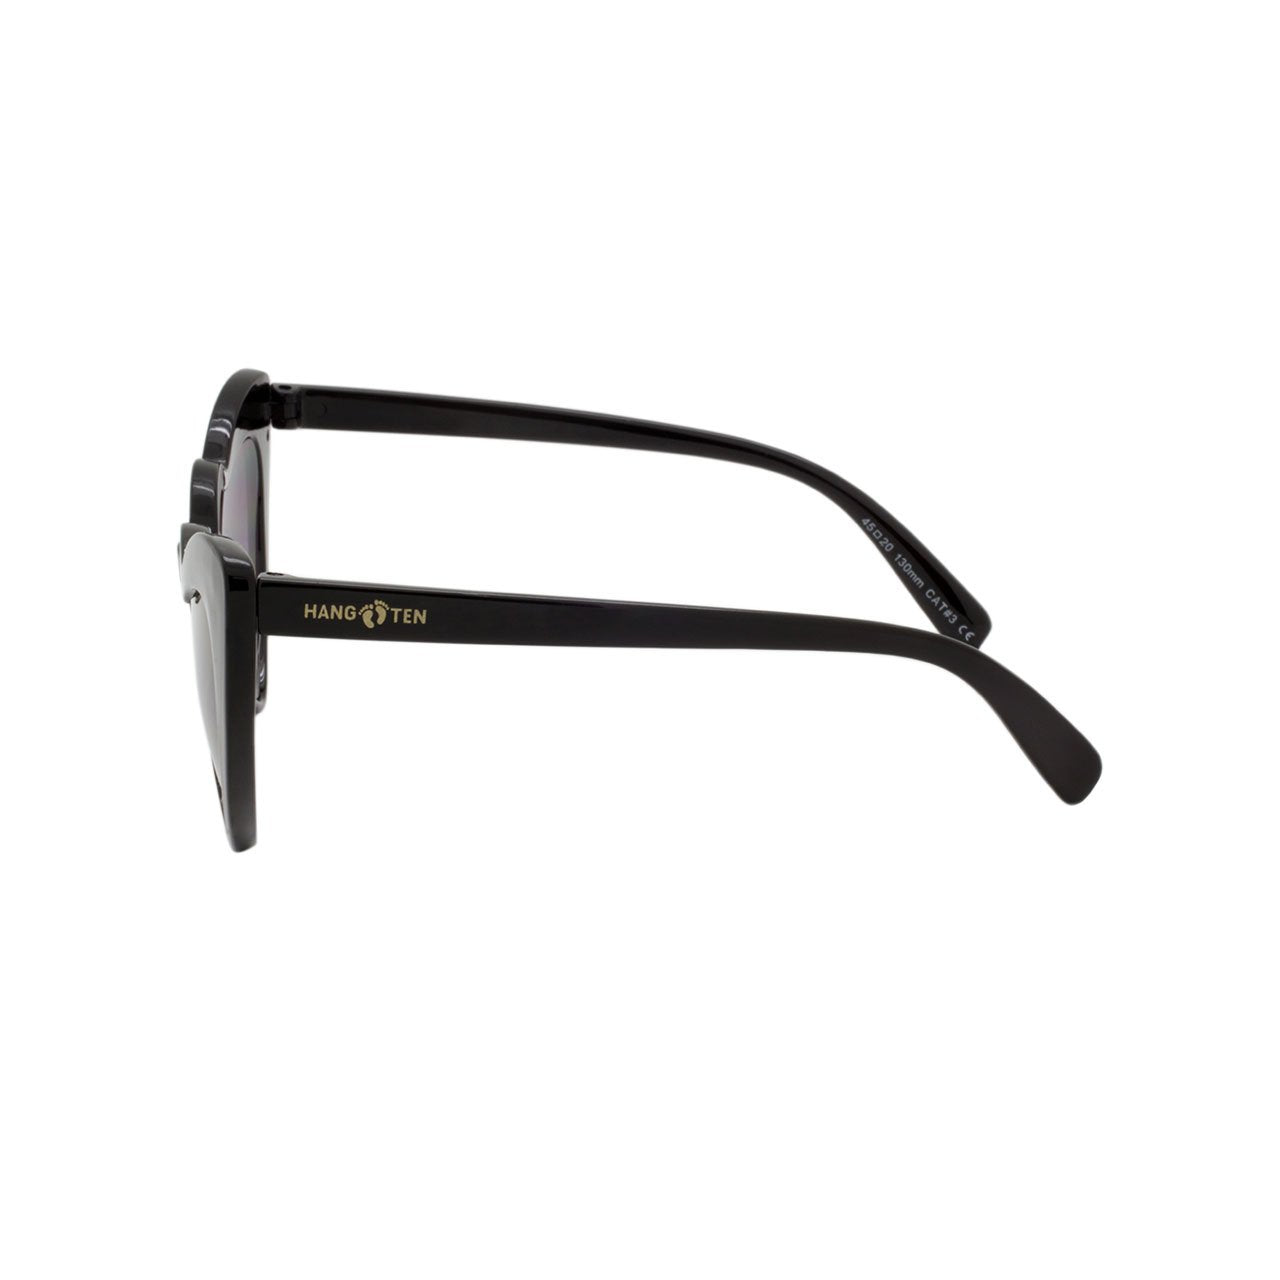 Buy Y&S Unisex Goggles UV Protected Sunglasses for Men Women Boys Girls  Pack in (gld-blk-av|kavali-sblk|blk-wayf) (55) at Amazon.in